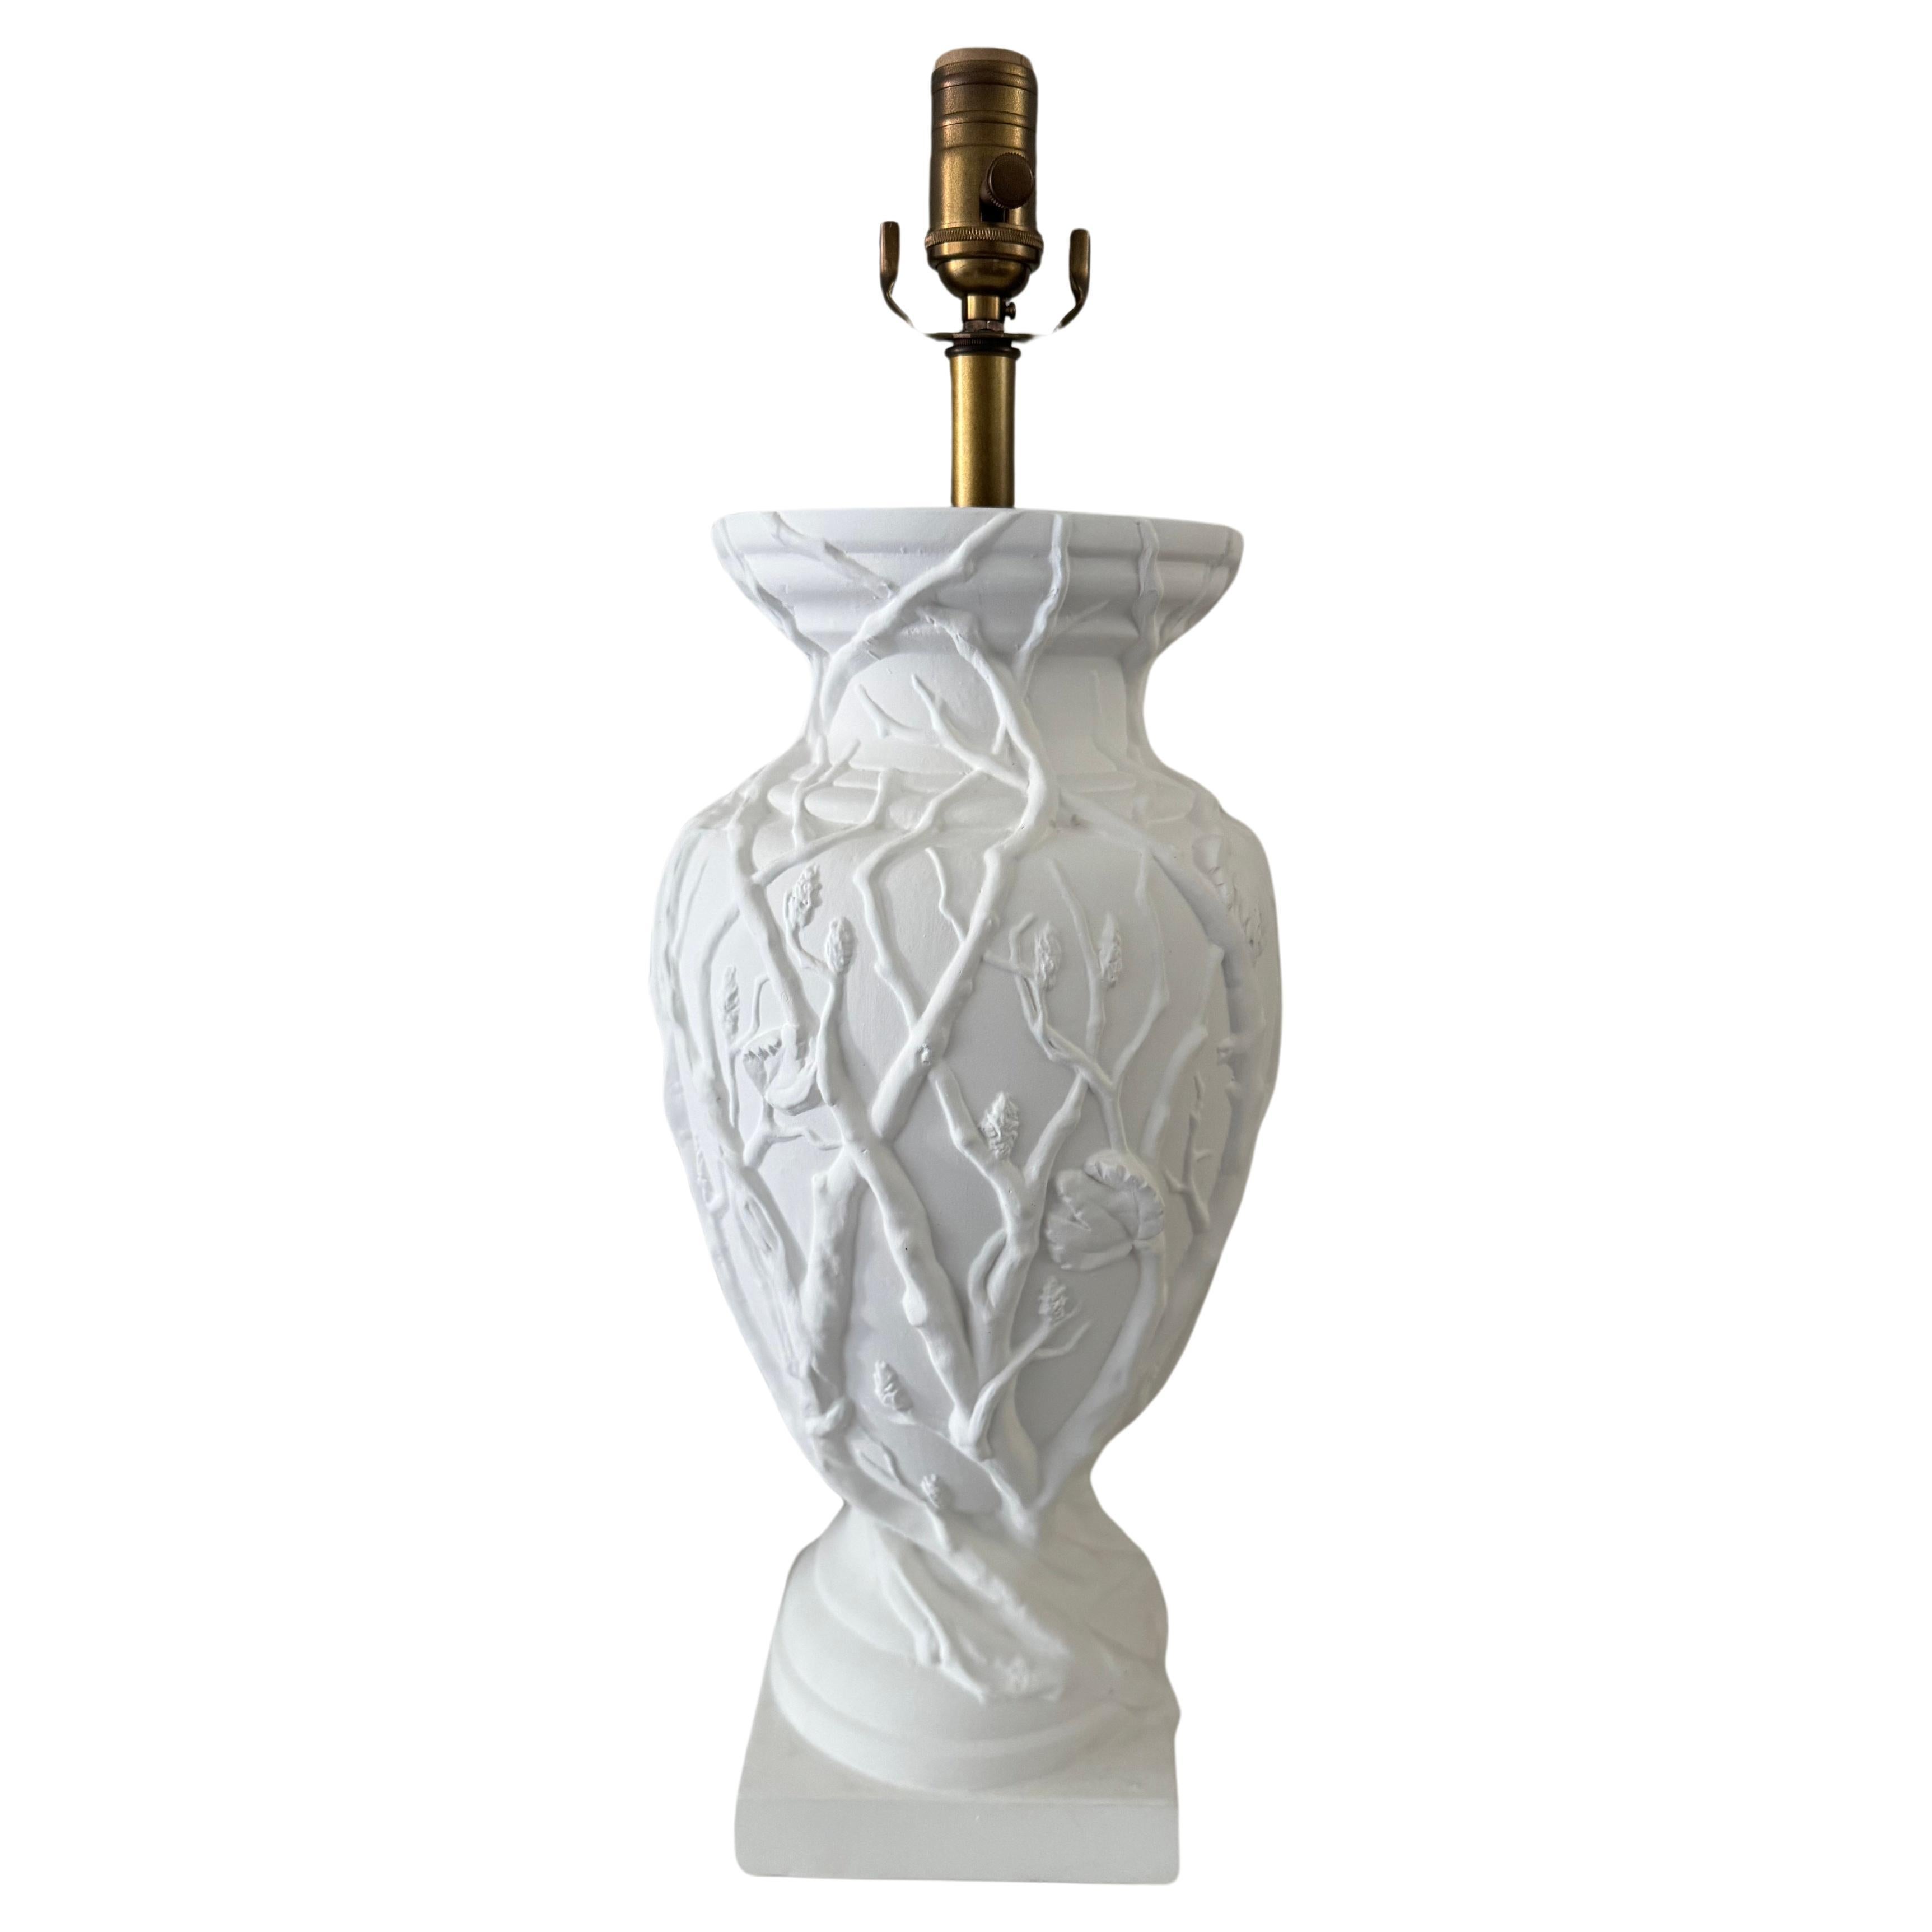 Virginia Creeper urn lamp For Sale